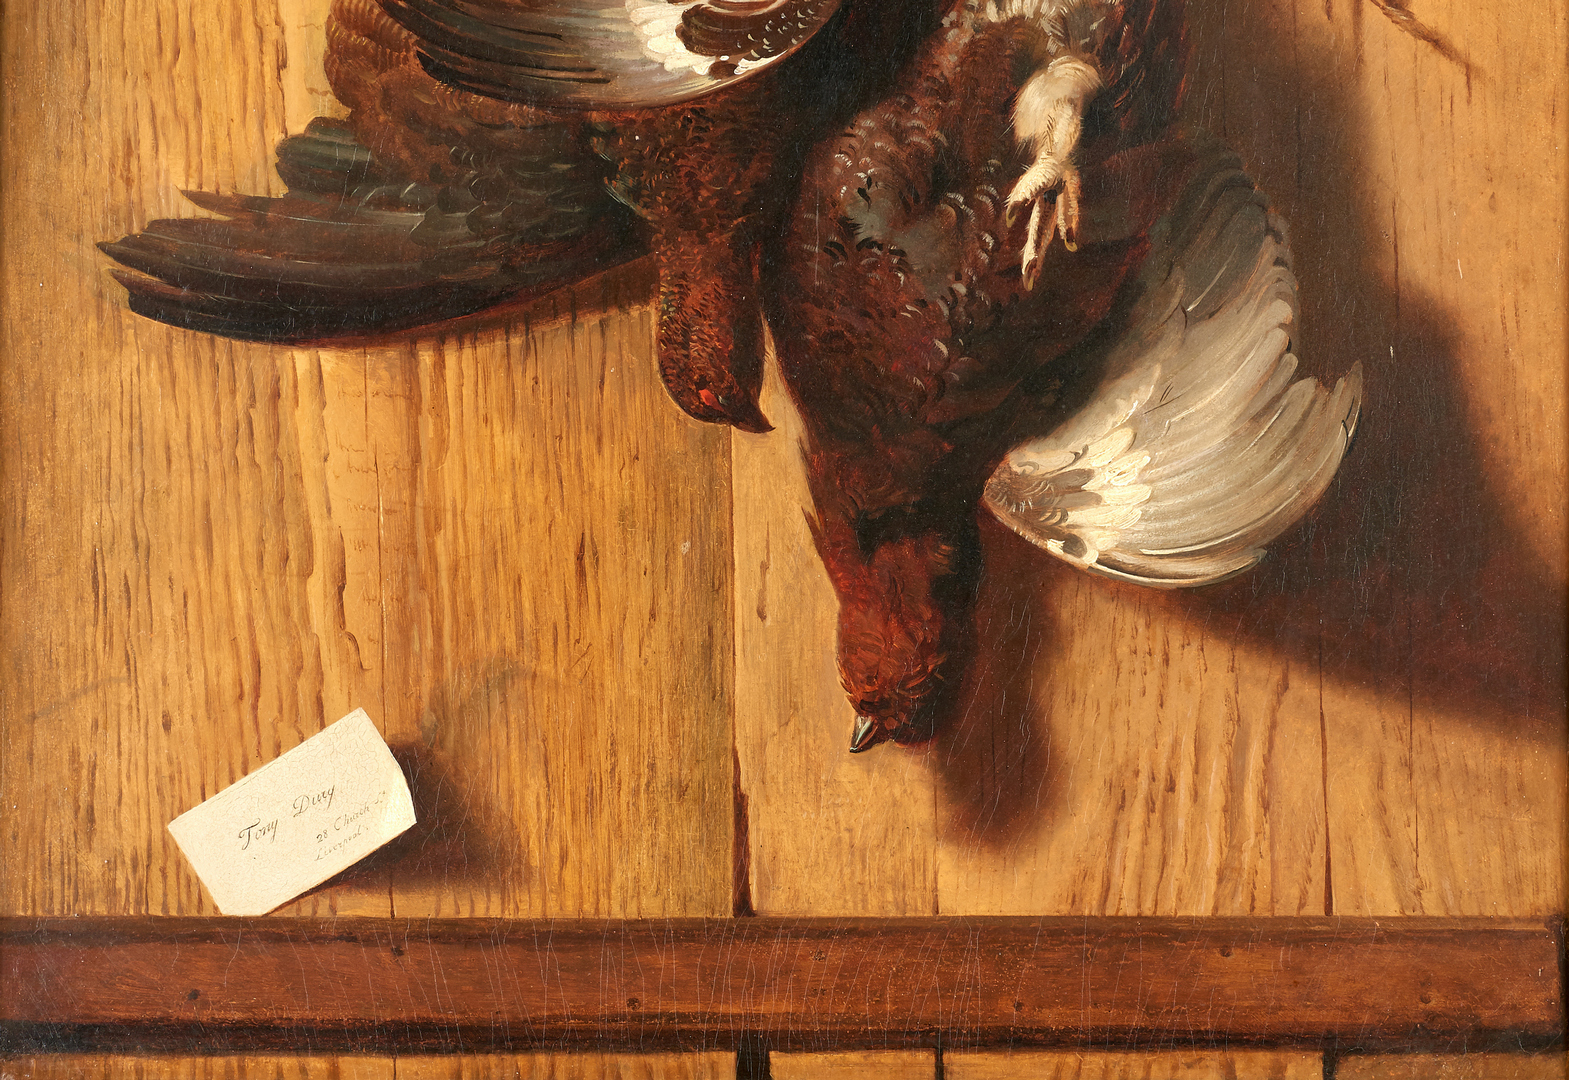 Lot 297: Antoine Dury O/C, Trompe L'Oeil Nature Morte with Pheasants